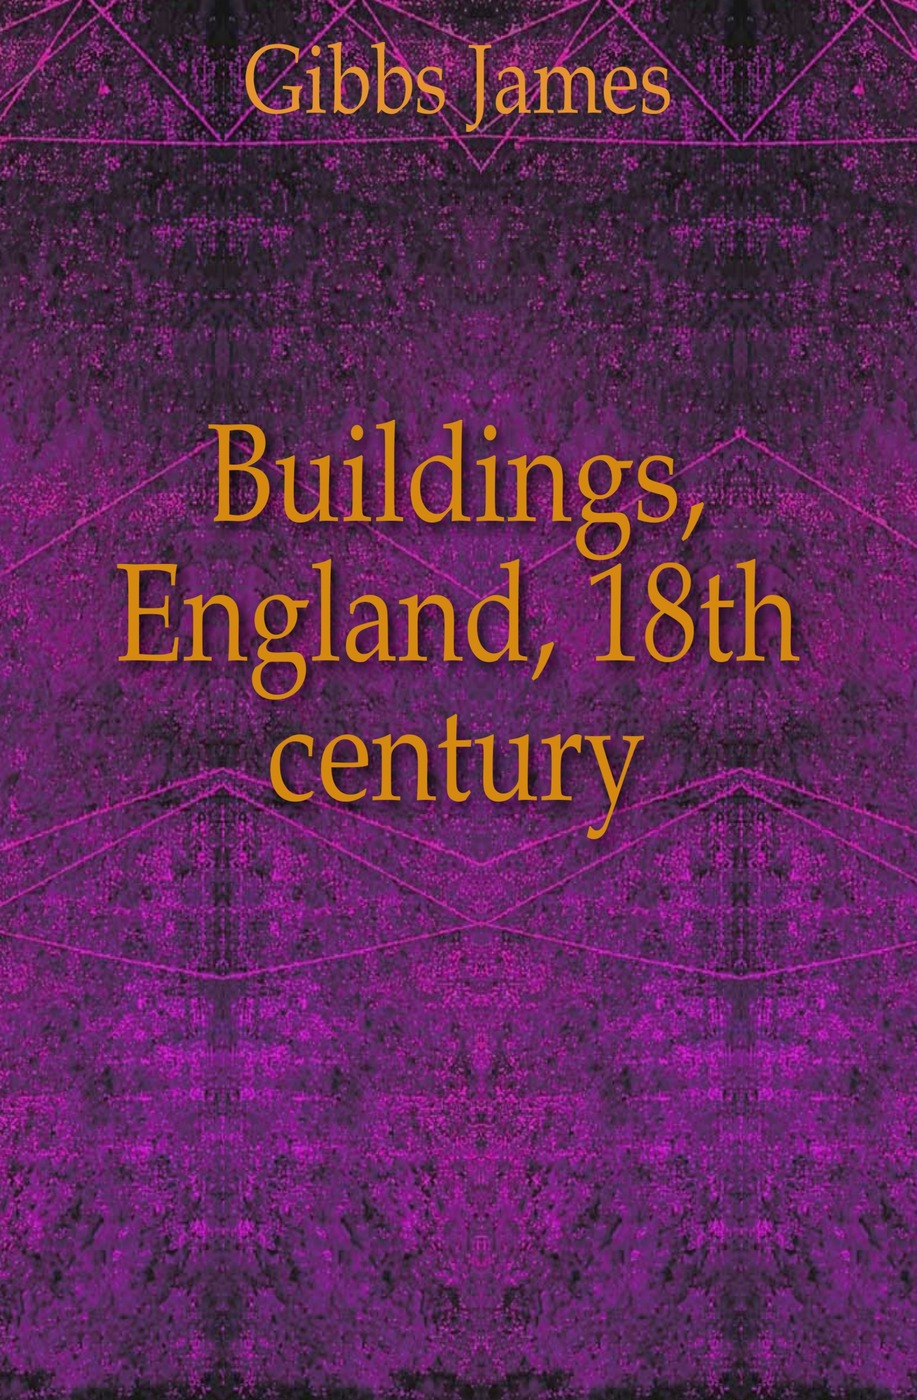 Buildings, England, 18th century